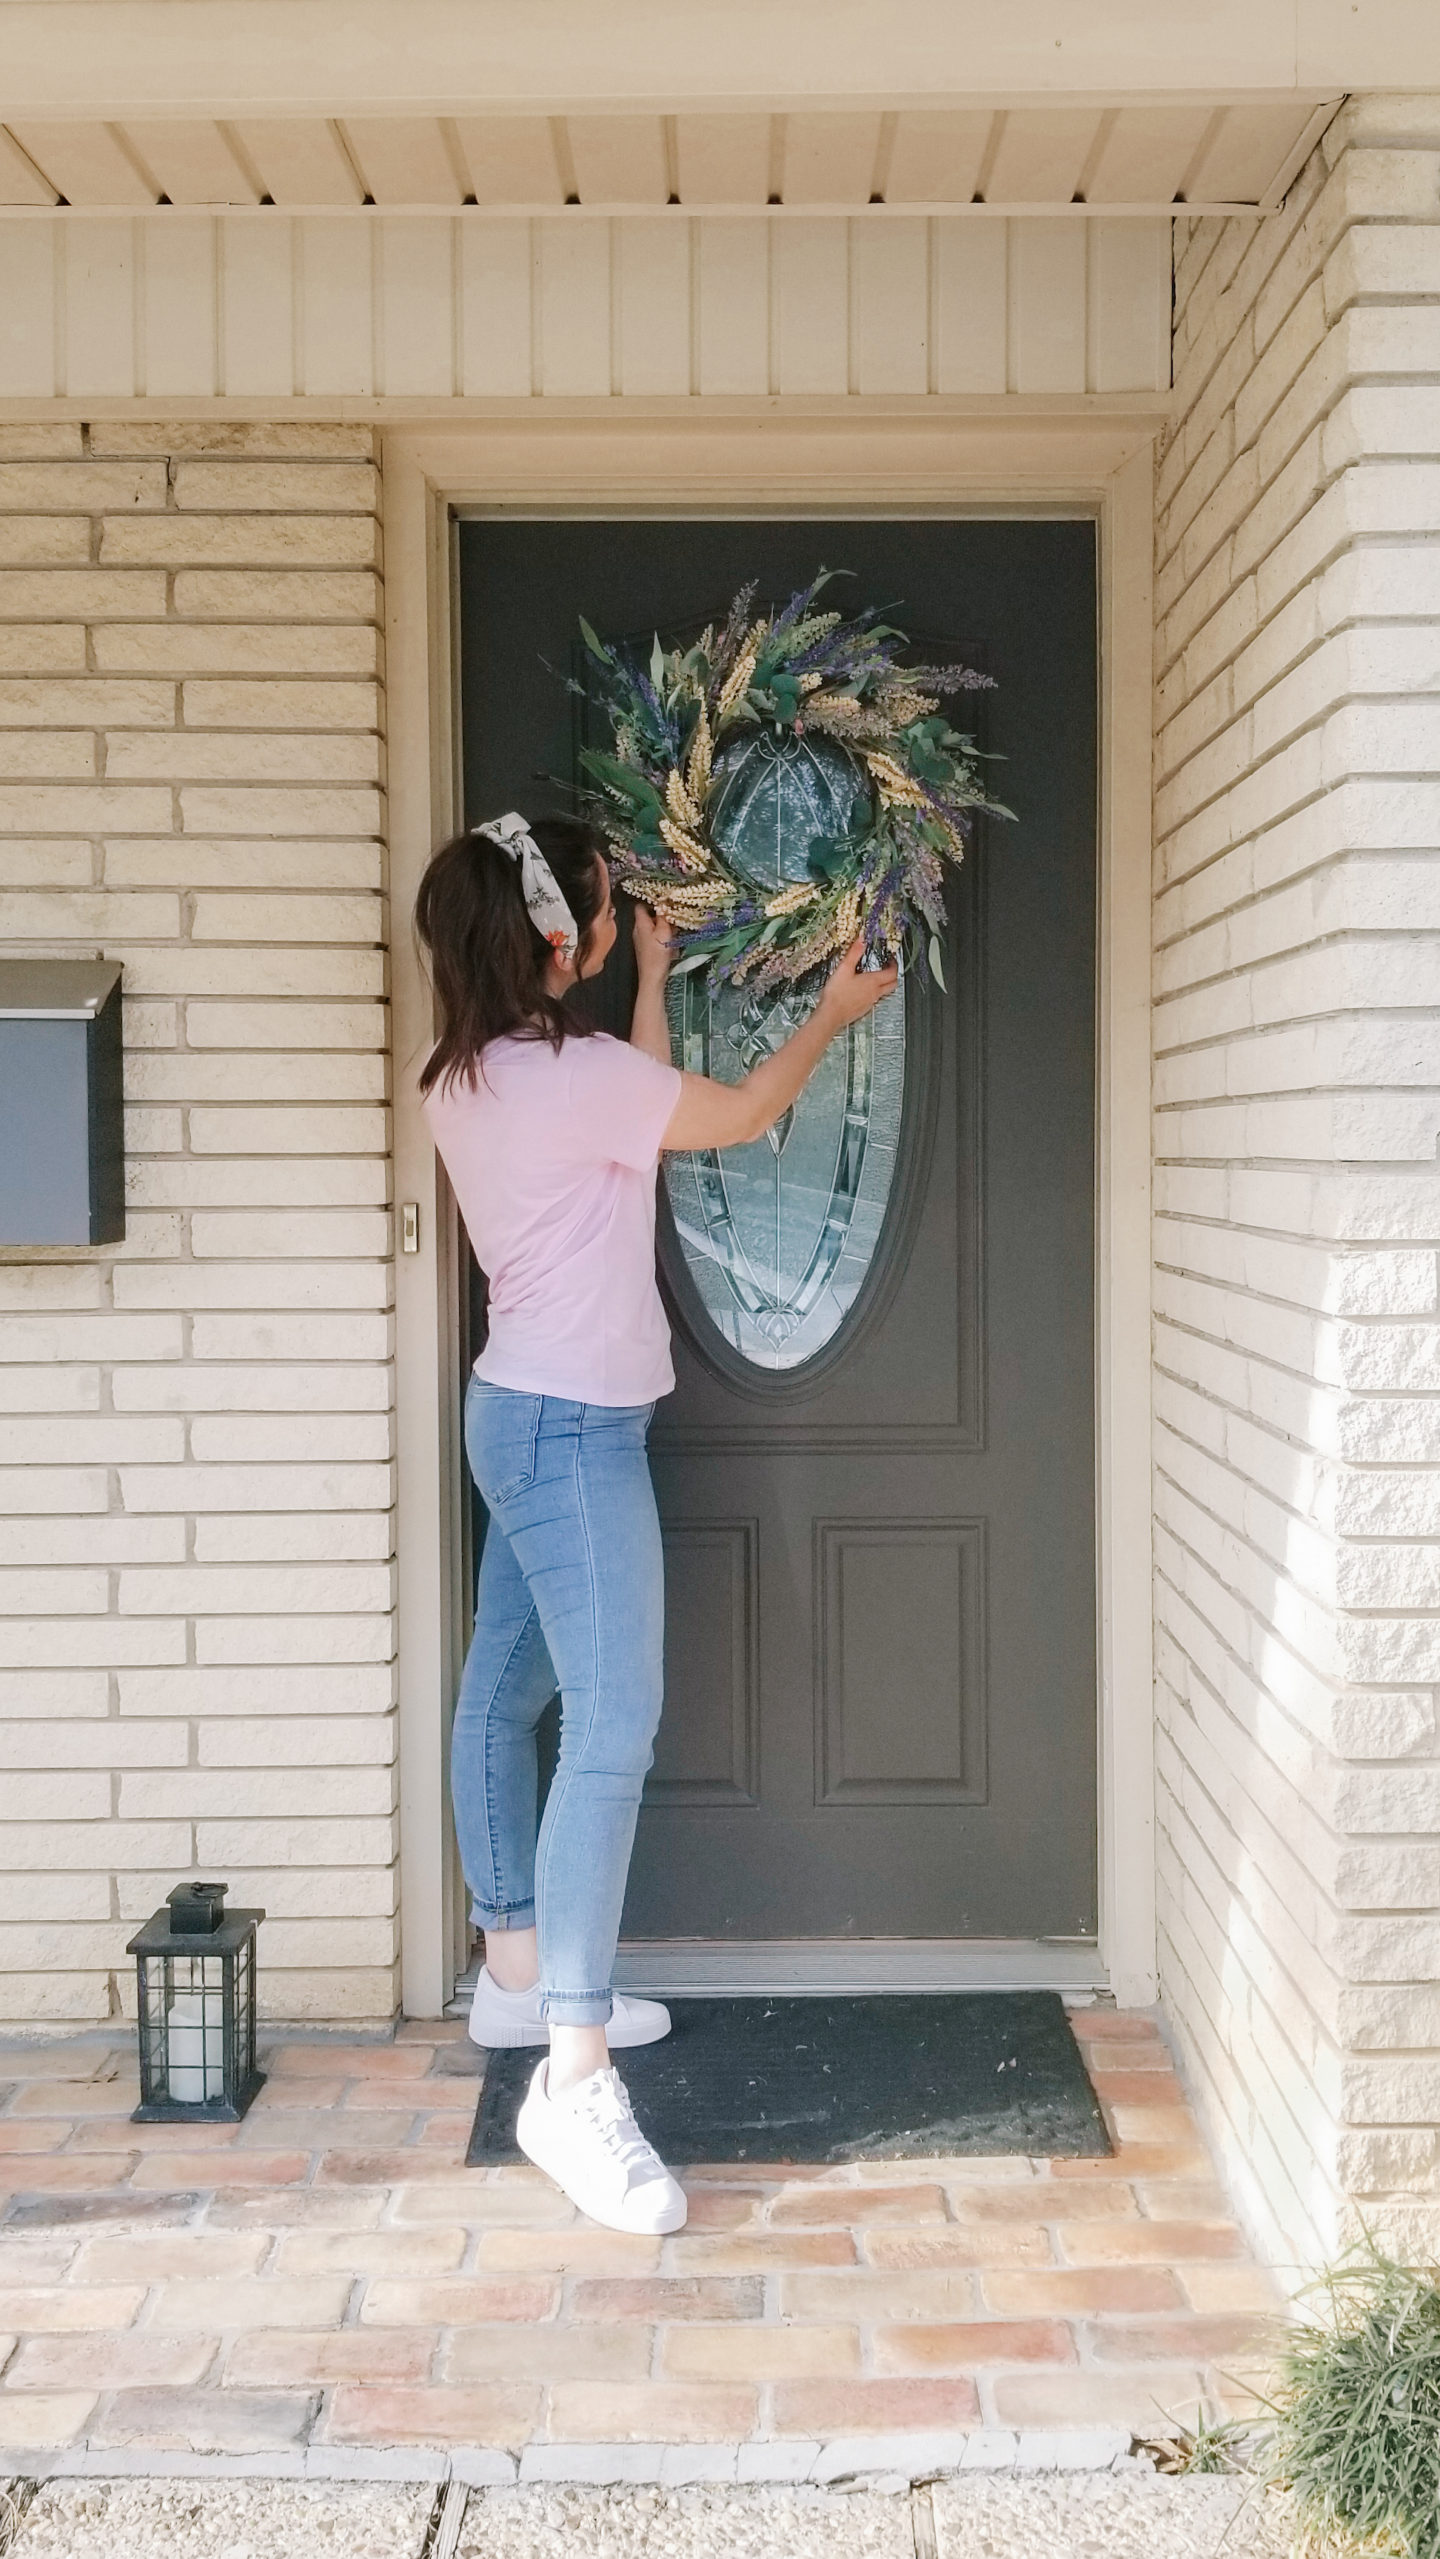 Placing my spring wreath on the front door